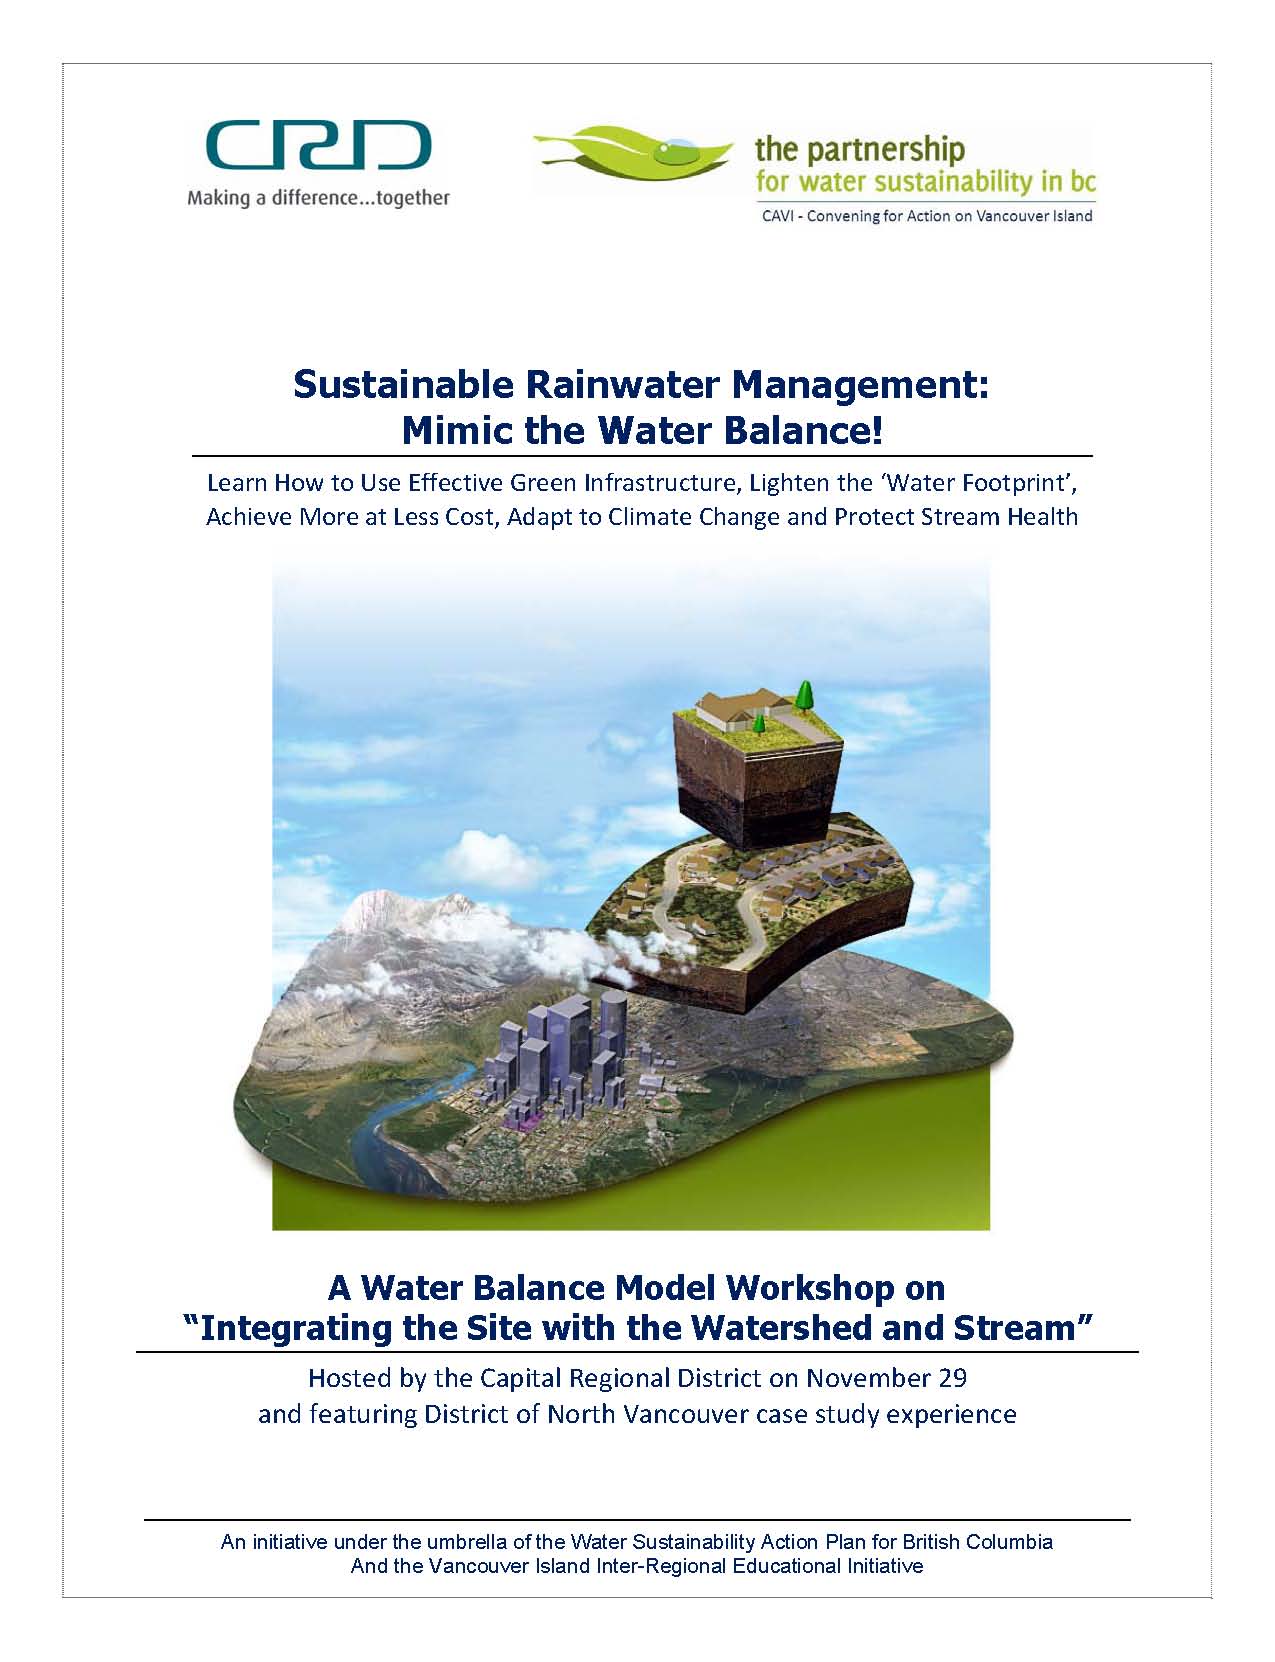 CRD_Water-Balance-Model-Workshop_flyer_Oct-2012